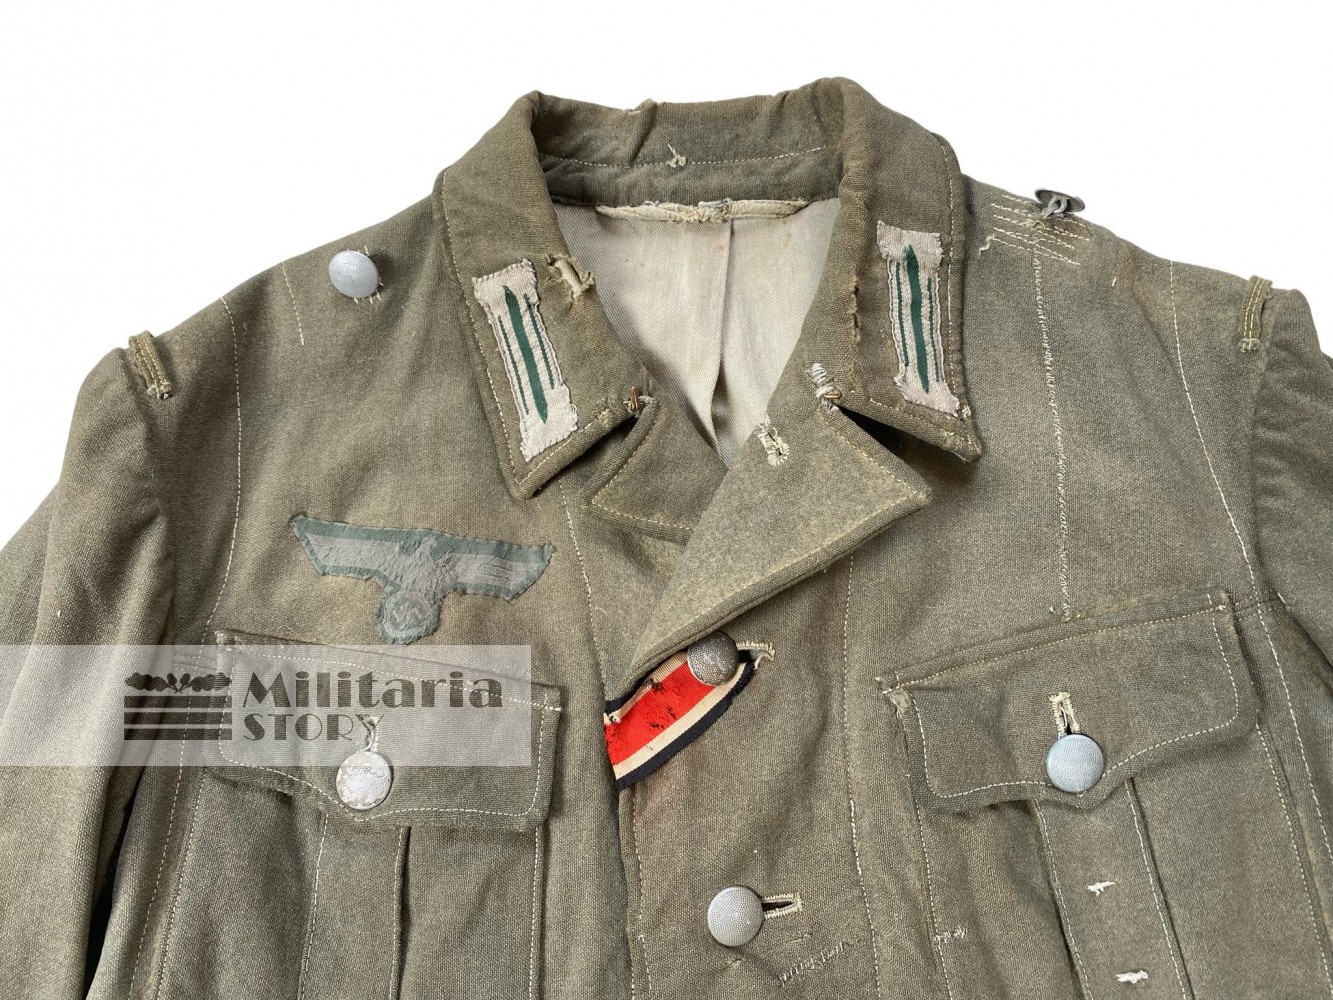 Heer M40 tunic - Heer M40 tunic: Third Reich Uniforms